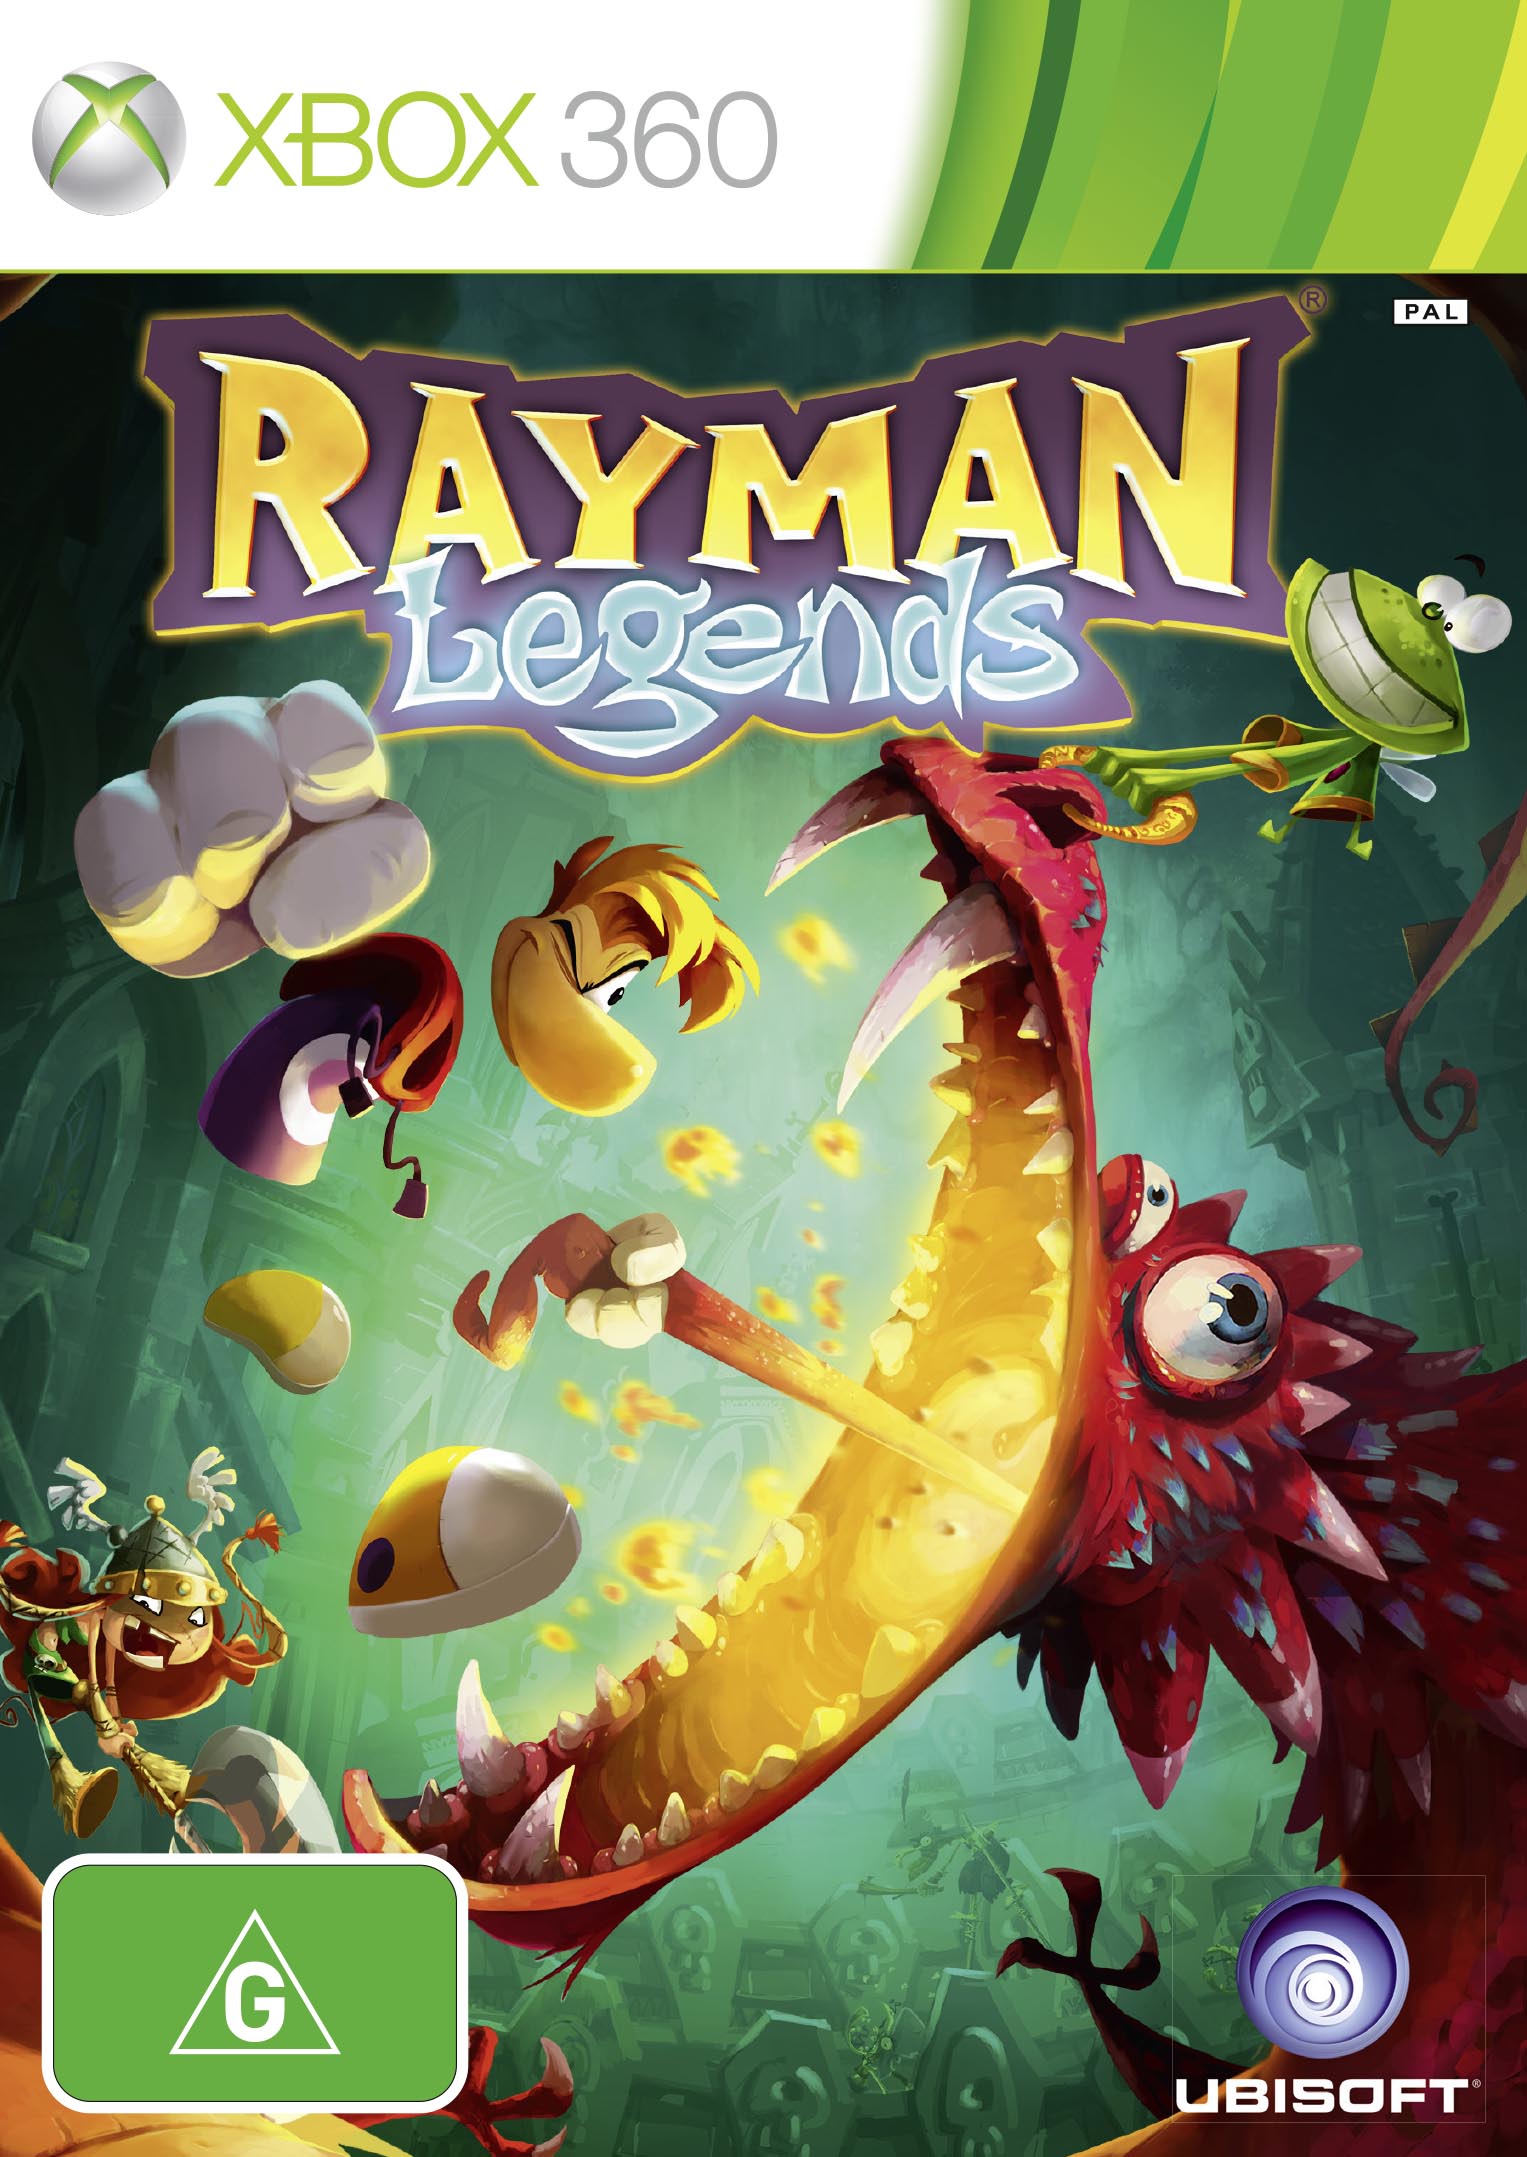 Rayman Legends 360 inlay ANZ.indd